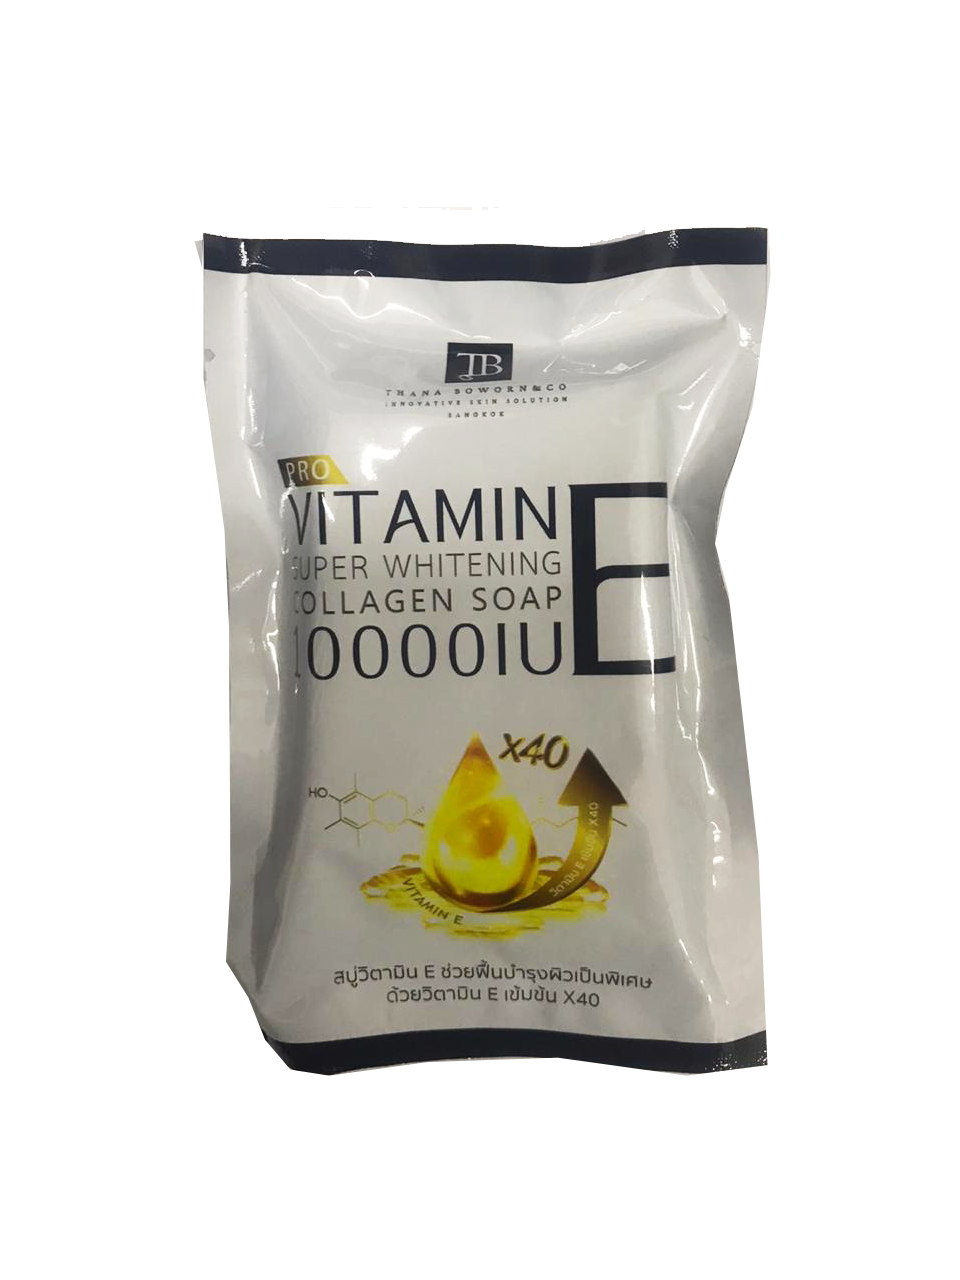 Vitamin E Super WHitening Collagen Soap